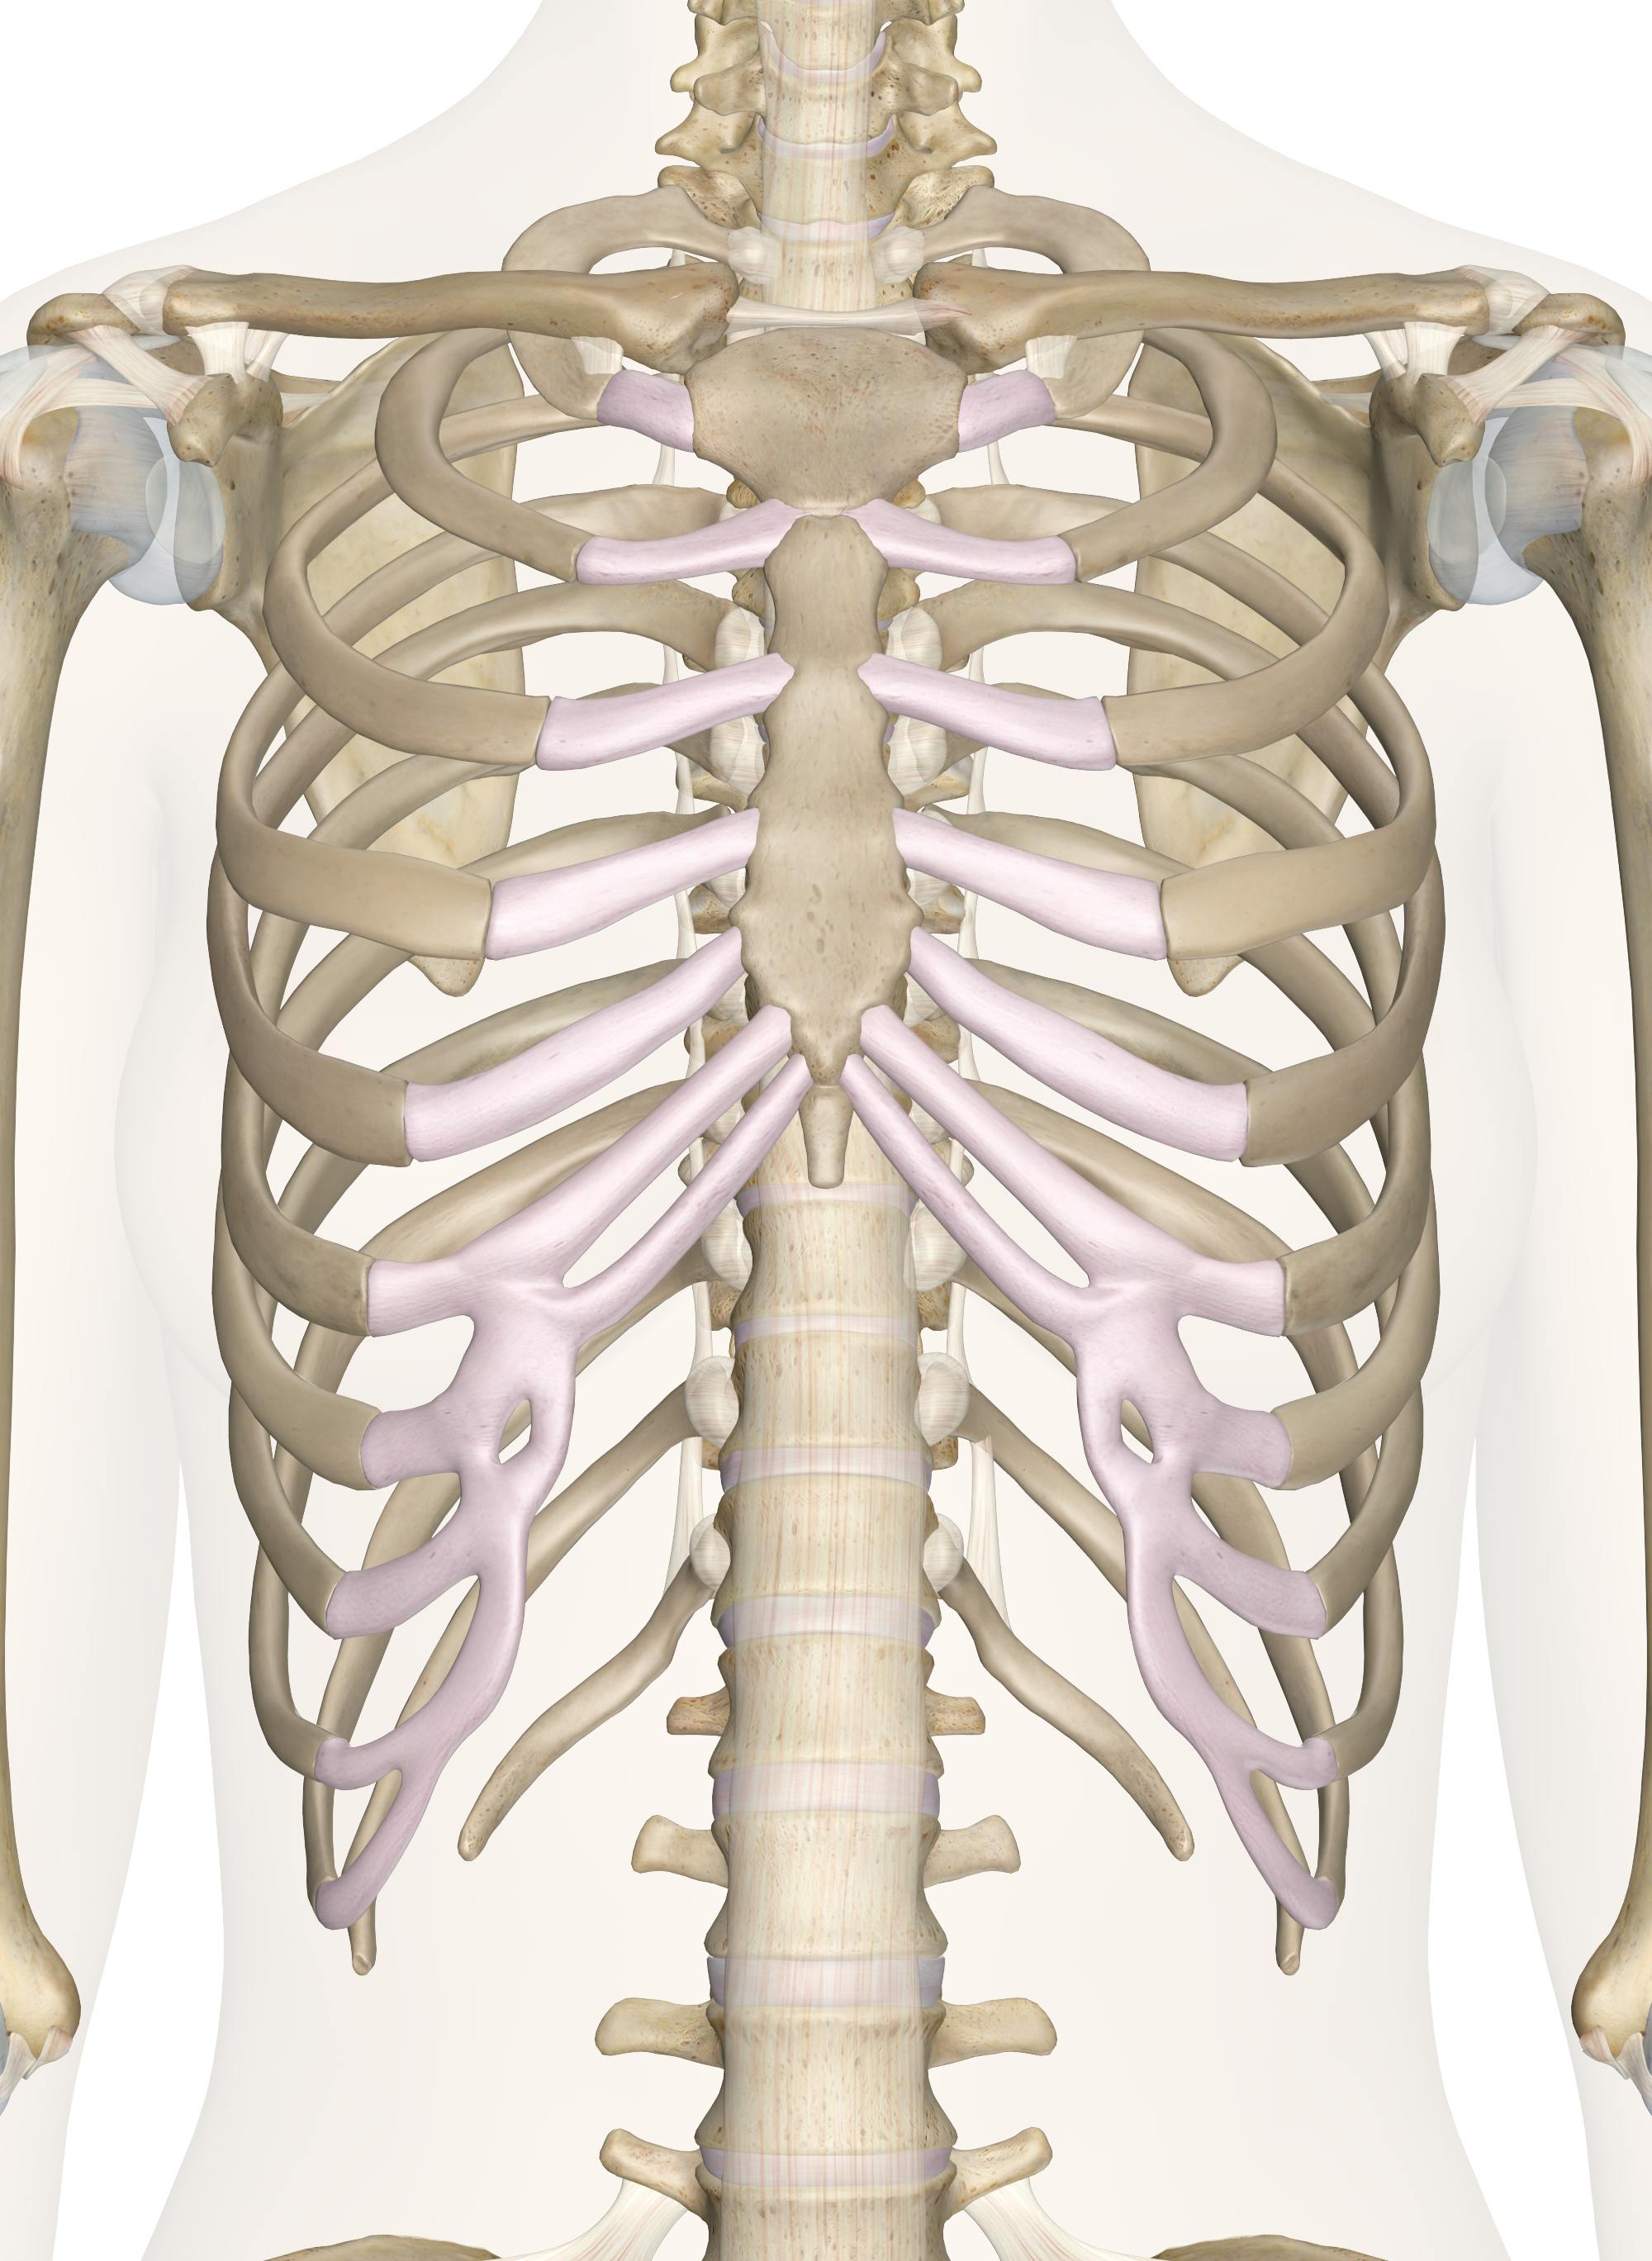 Anatomy Of Upper Yorso The Abdomen Human Anatomy Picture Function